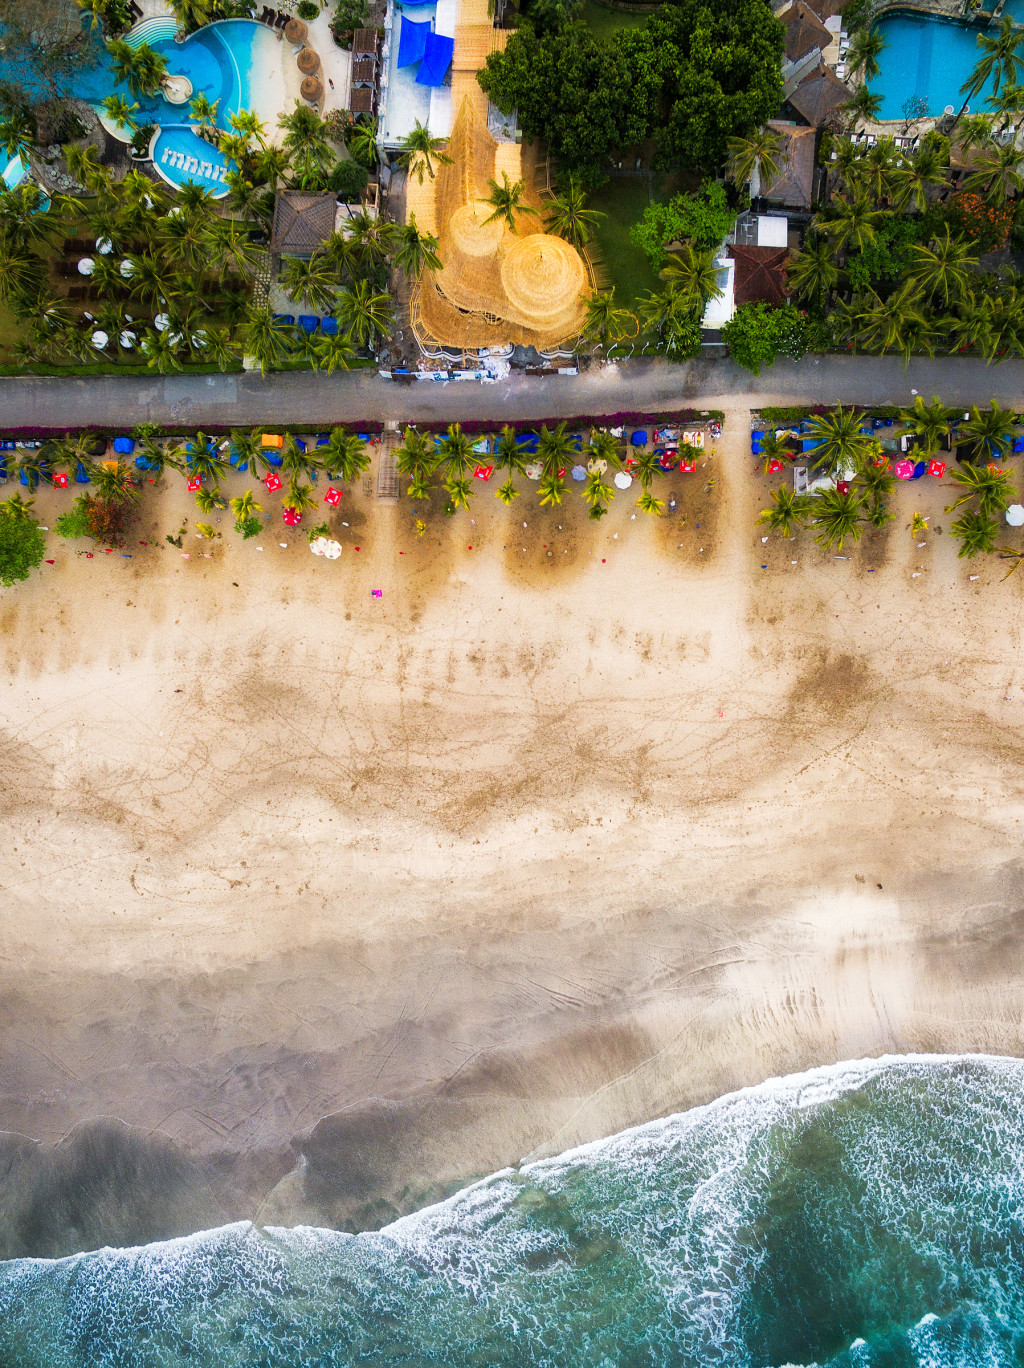 Indonesia Kuta Beach by Drone by Michael Matti